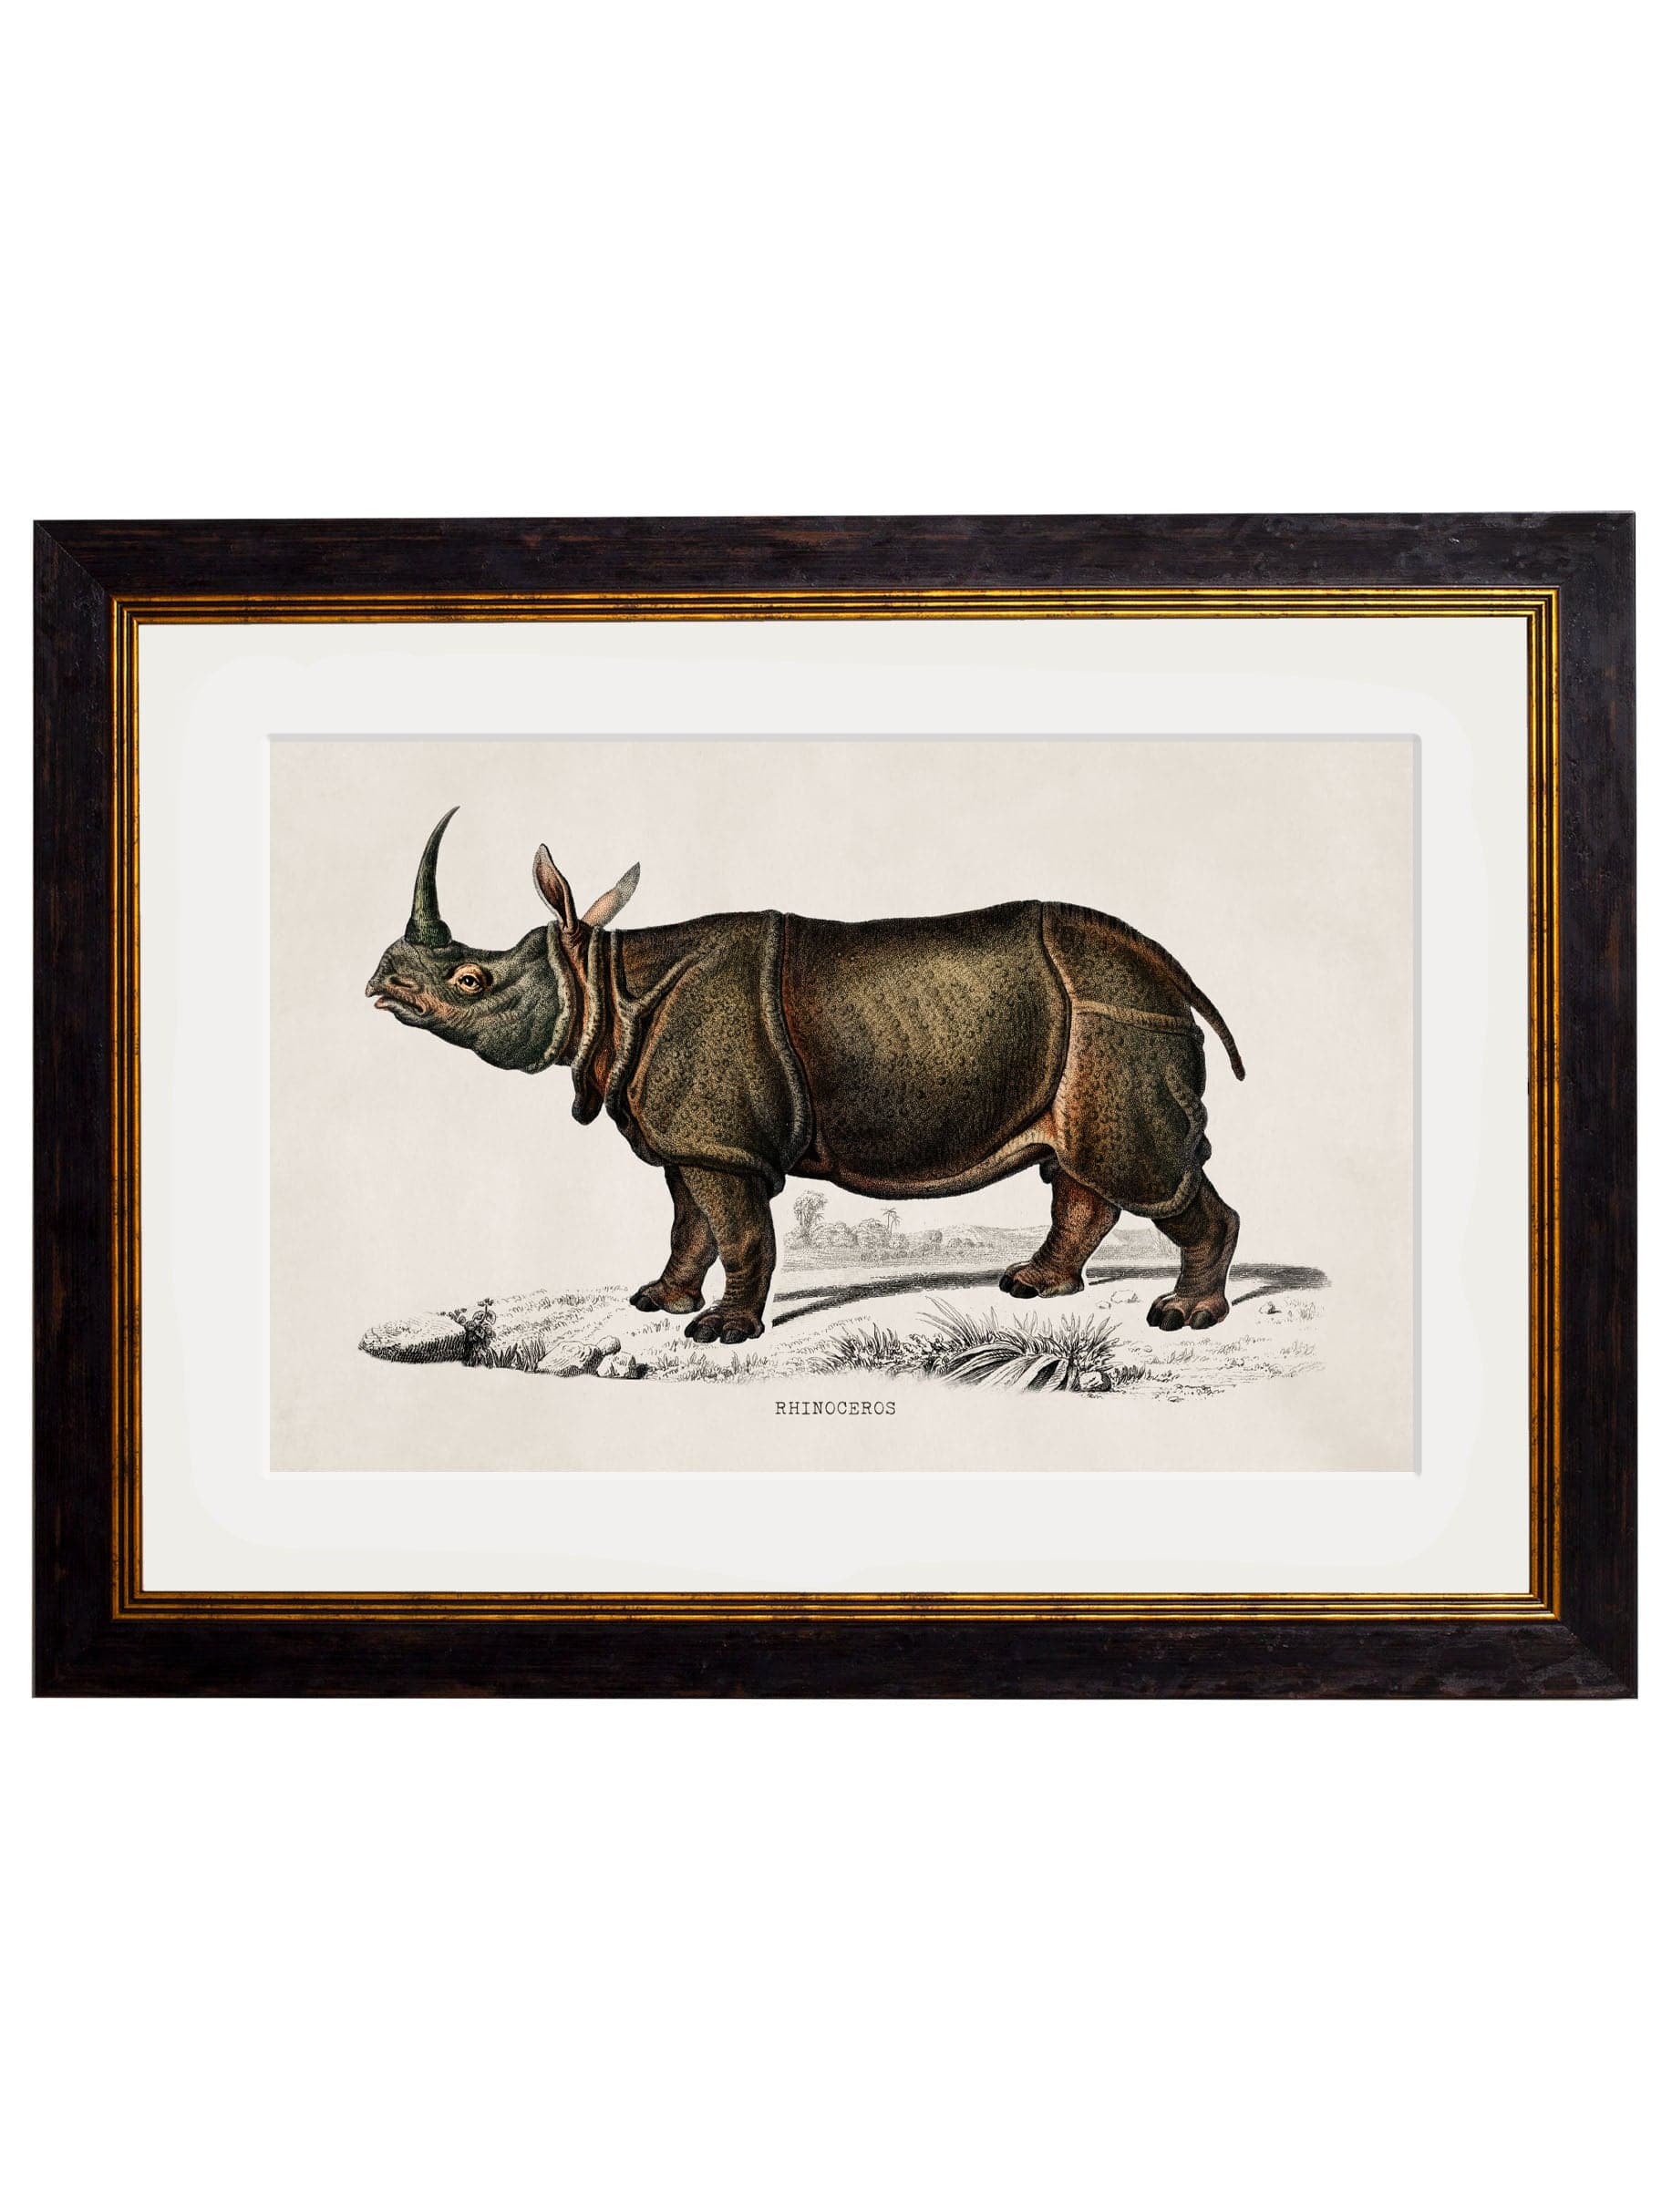 C.1846 Rhino for sale - Woodcock and Cavendish